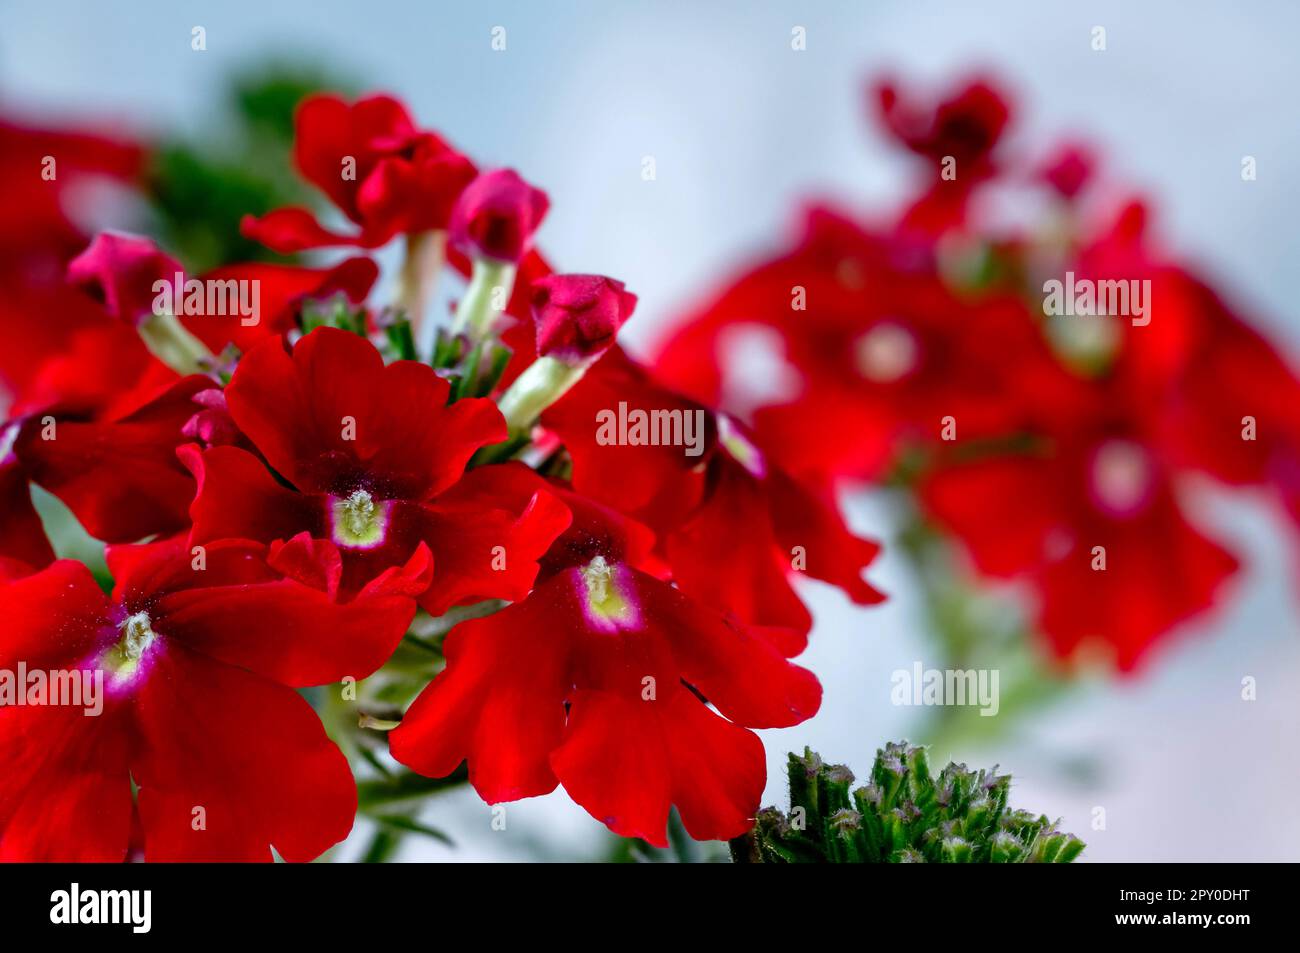 Garden verbena (Verbena hybrida), red flowers of a popular ornamental plant, delicate elegant romantic background, flowers in full bloom close-up Stock Photo